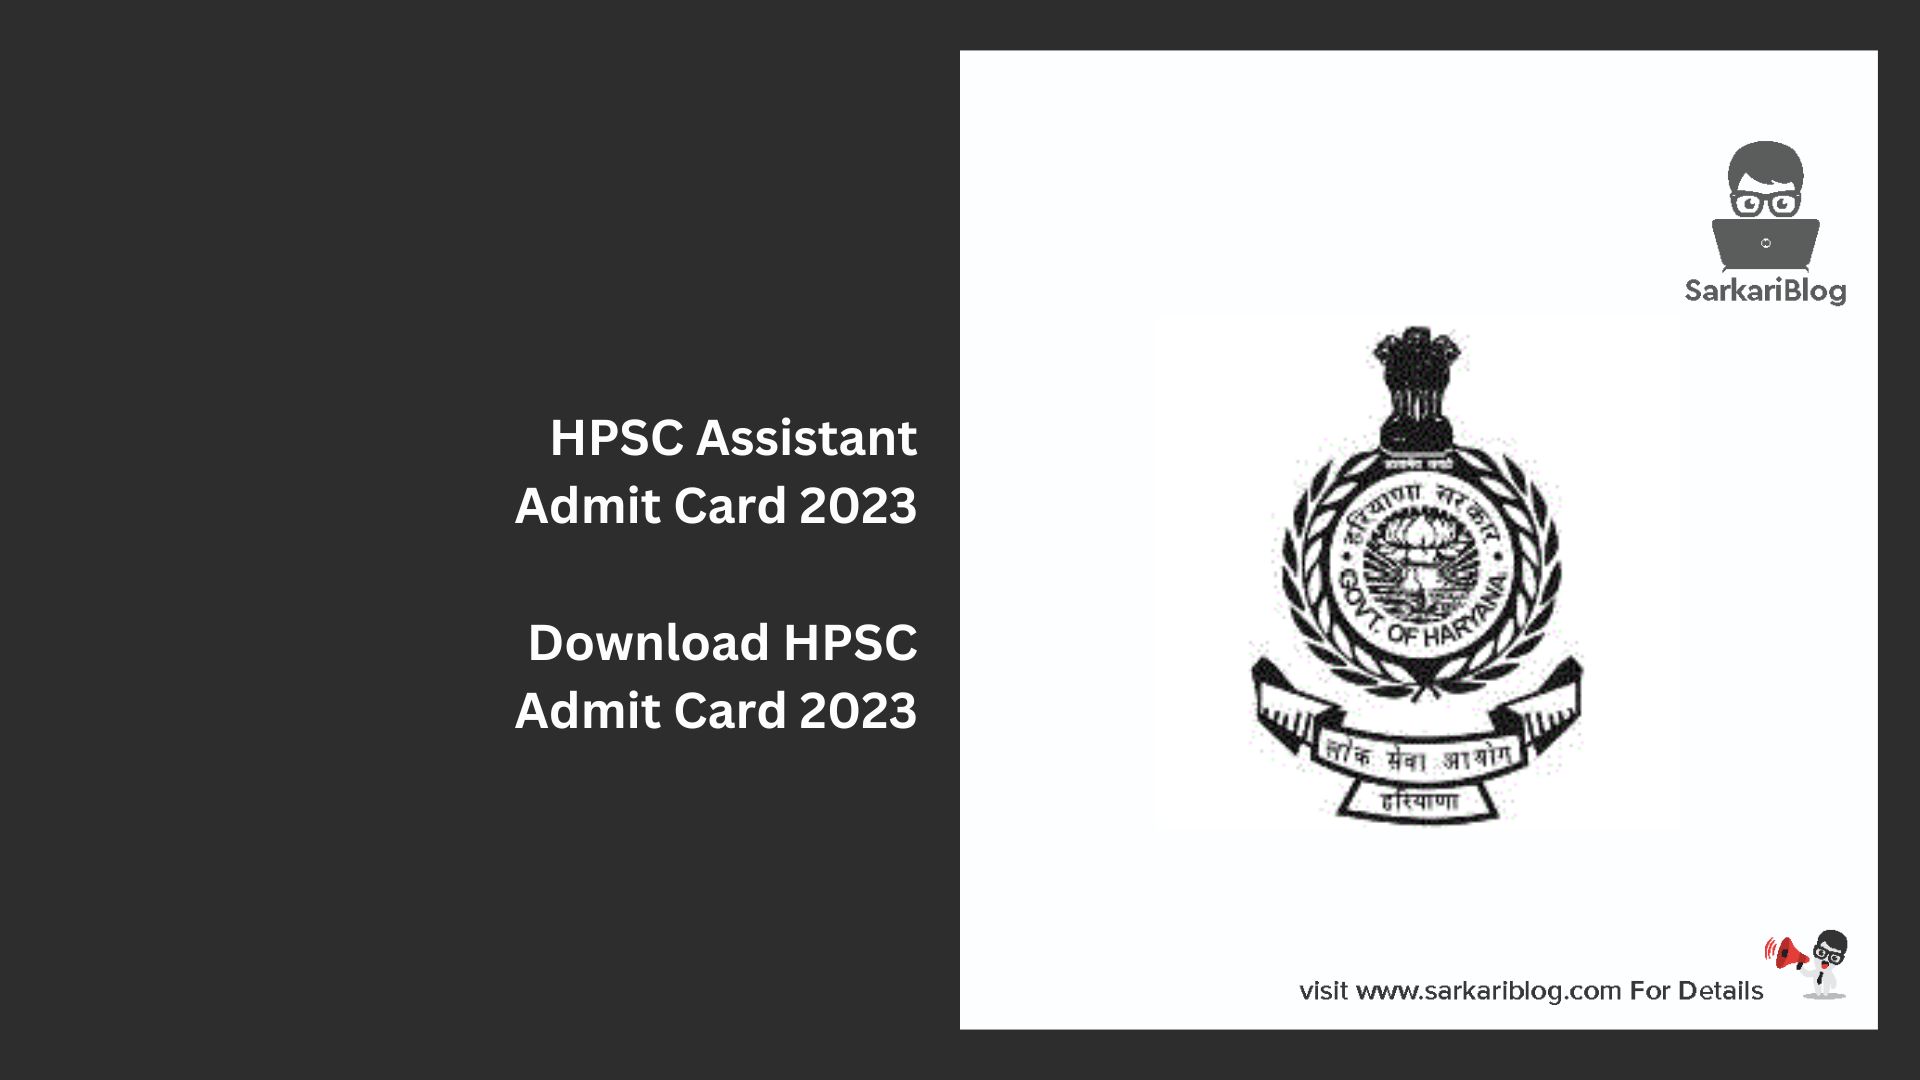 HPSC Assistant Admit Card 2023